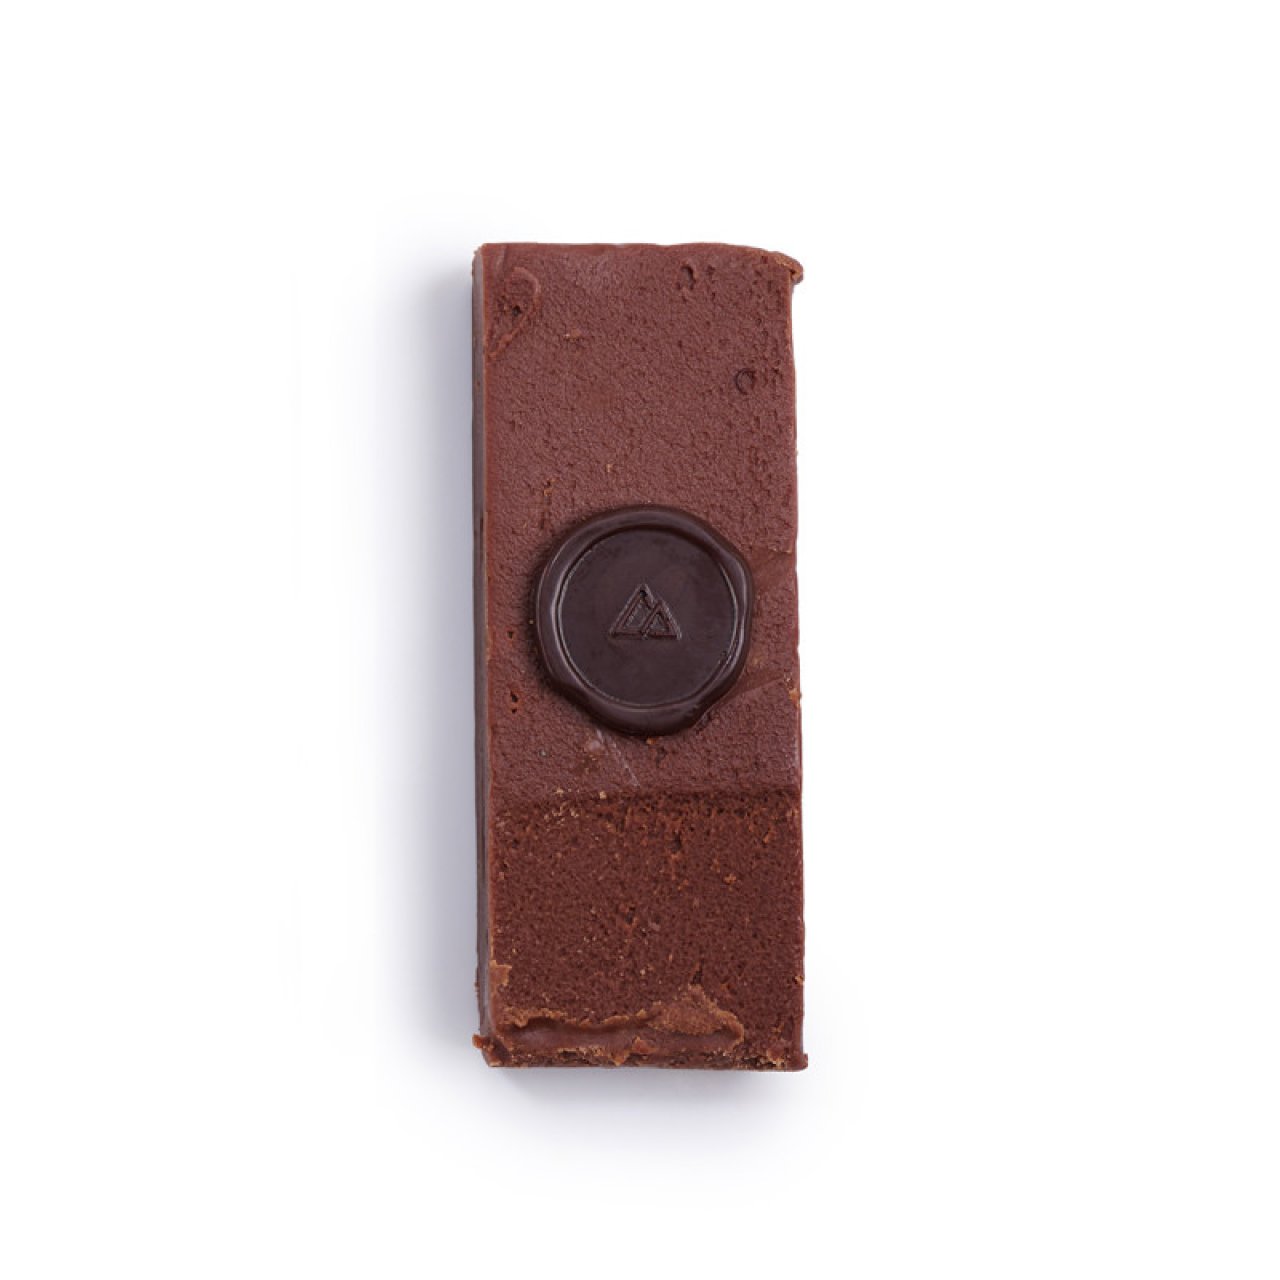 fudge-doublechocolate-unwrapped-24.jpg